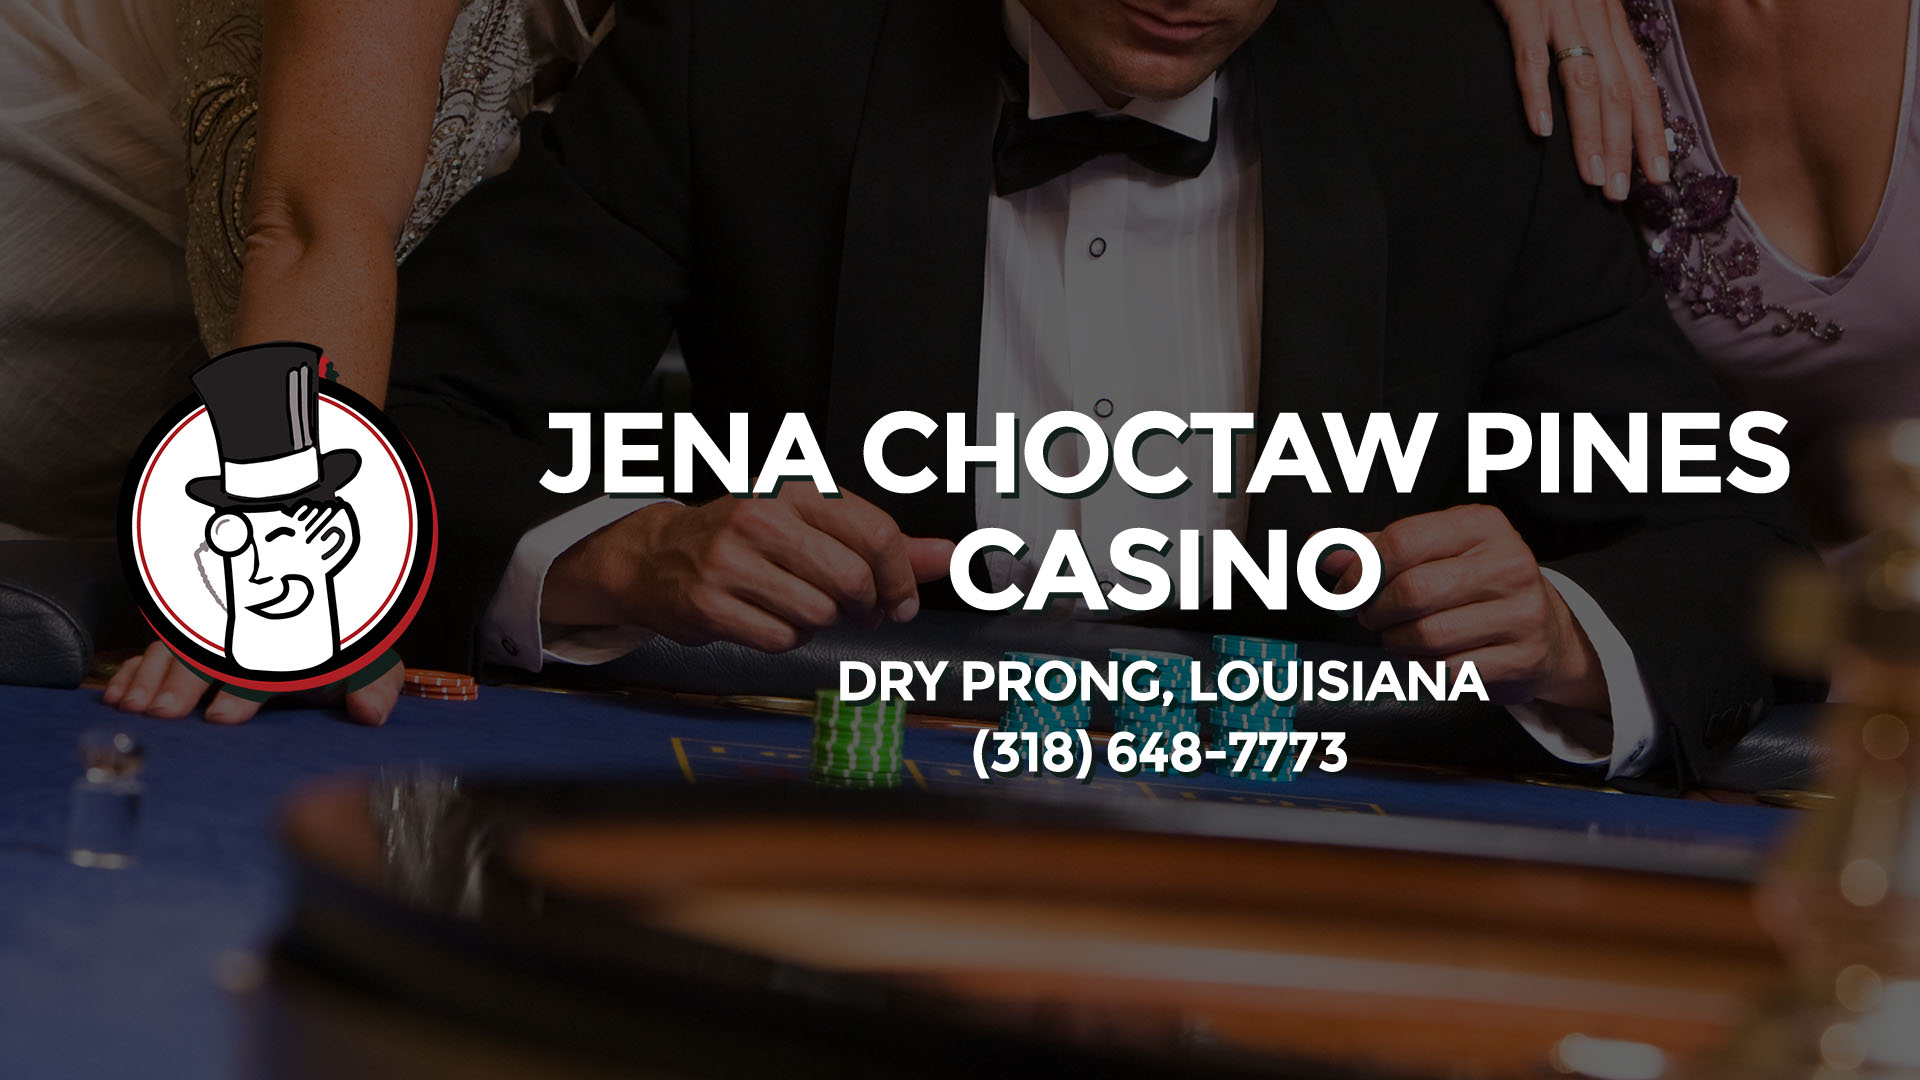 jena choctaw pines casino careers